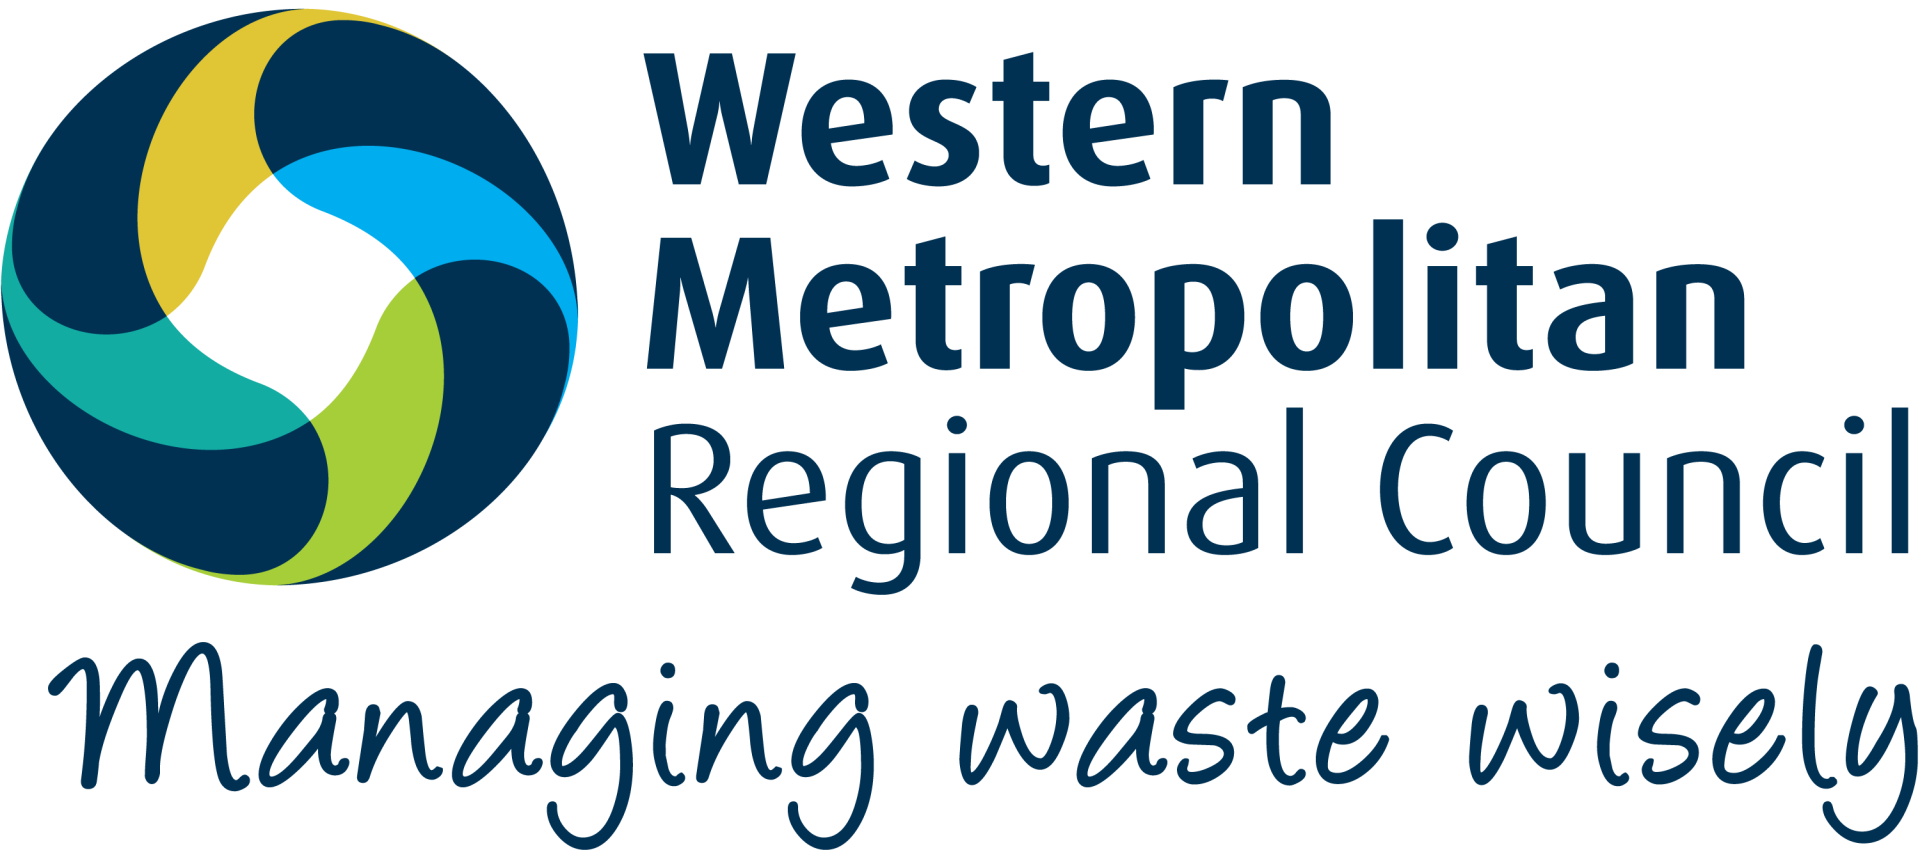 Western Metropolitan Regional Council logo